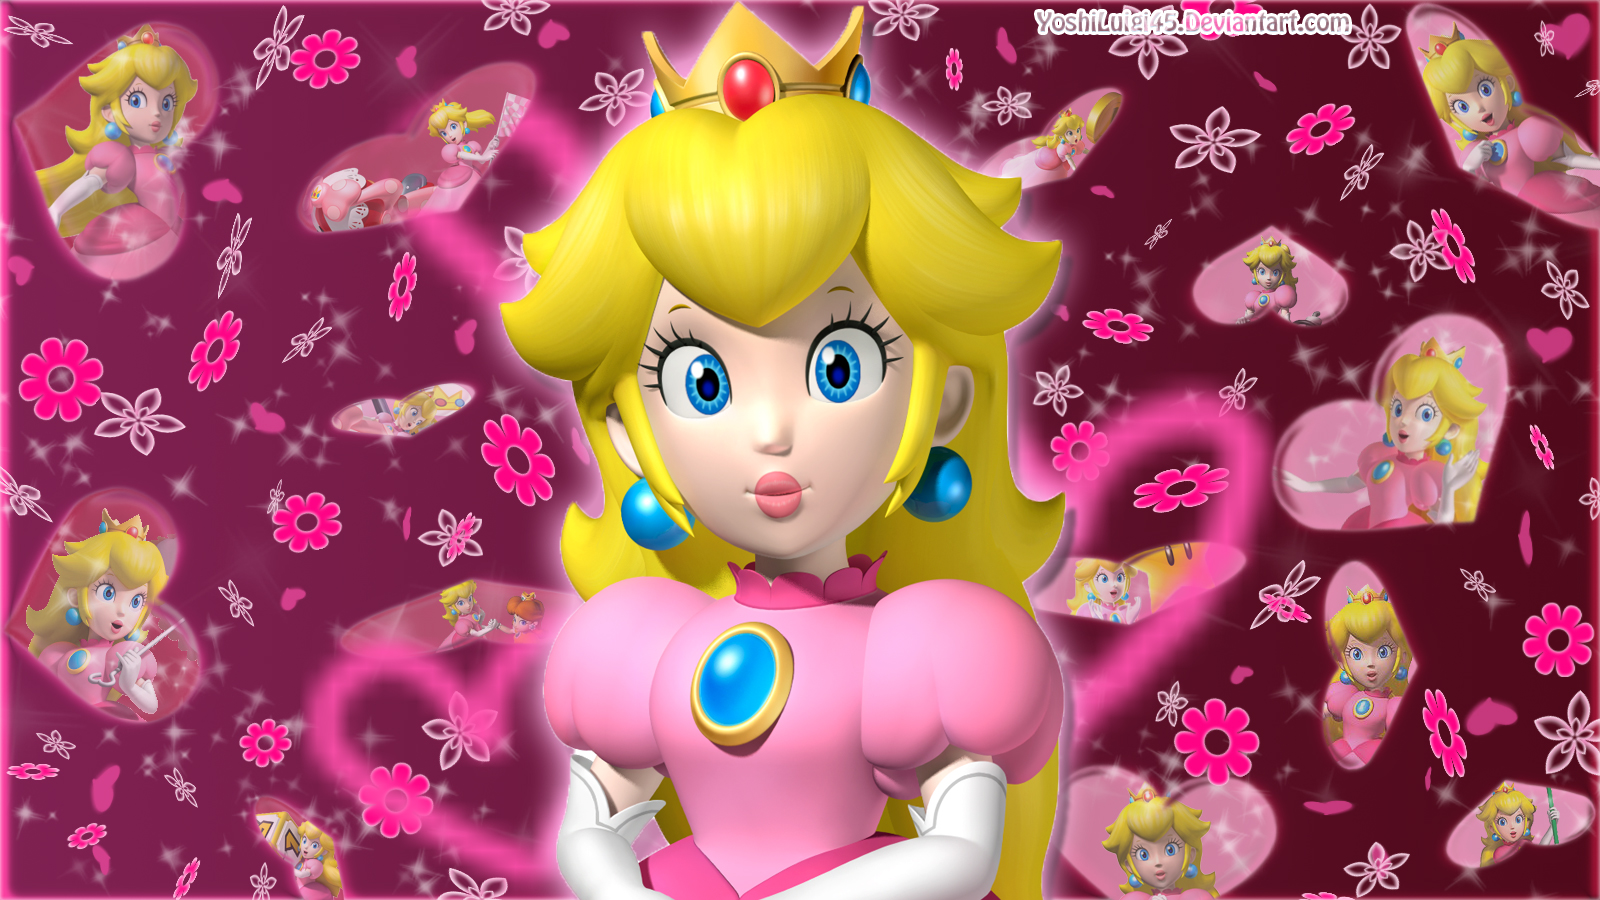 A Princess Peach Background By Yoshiluigi45